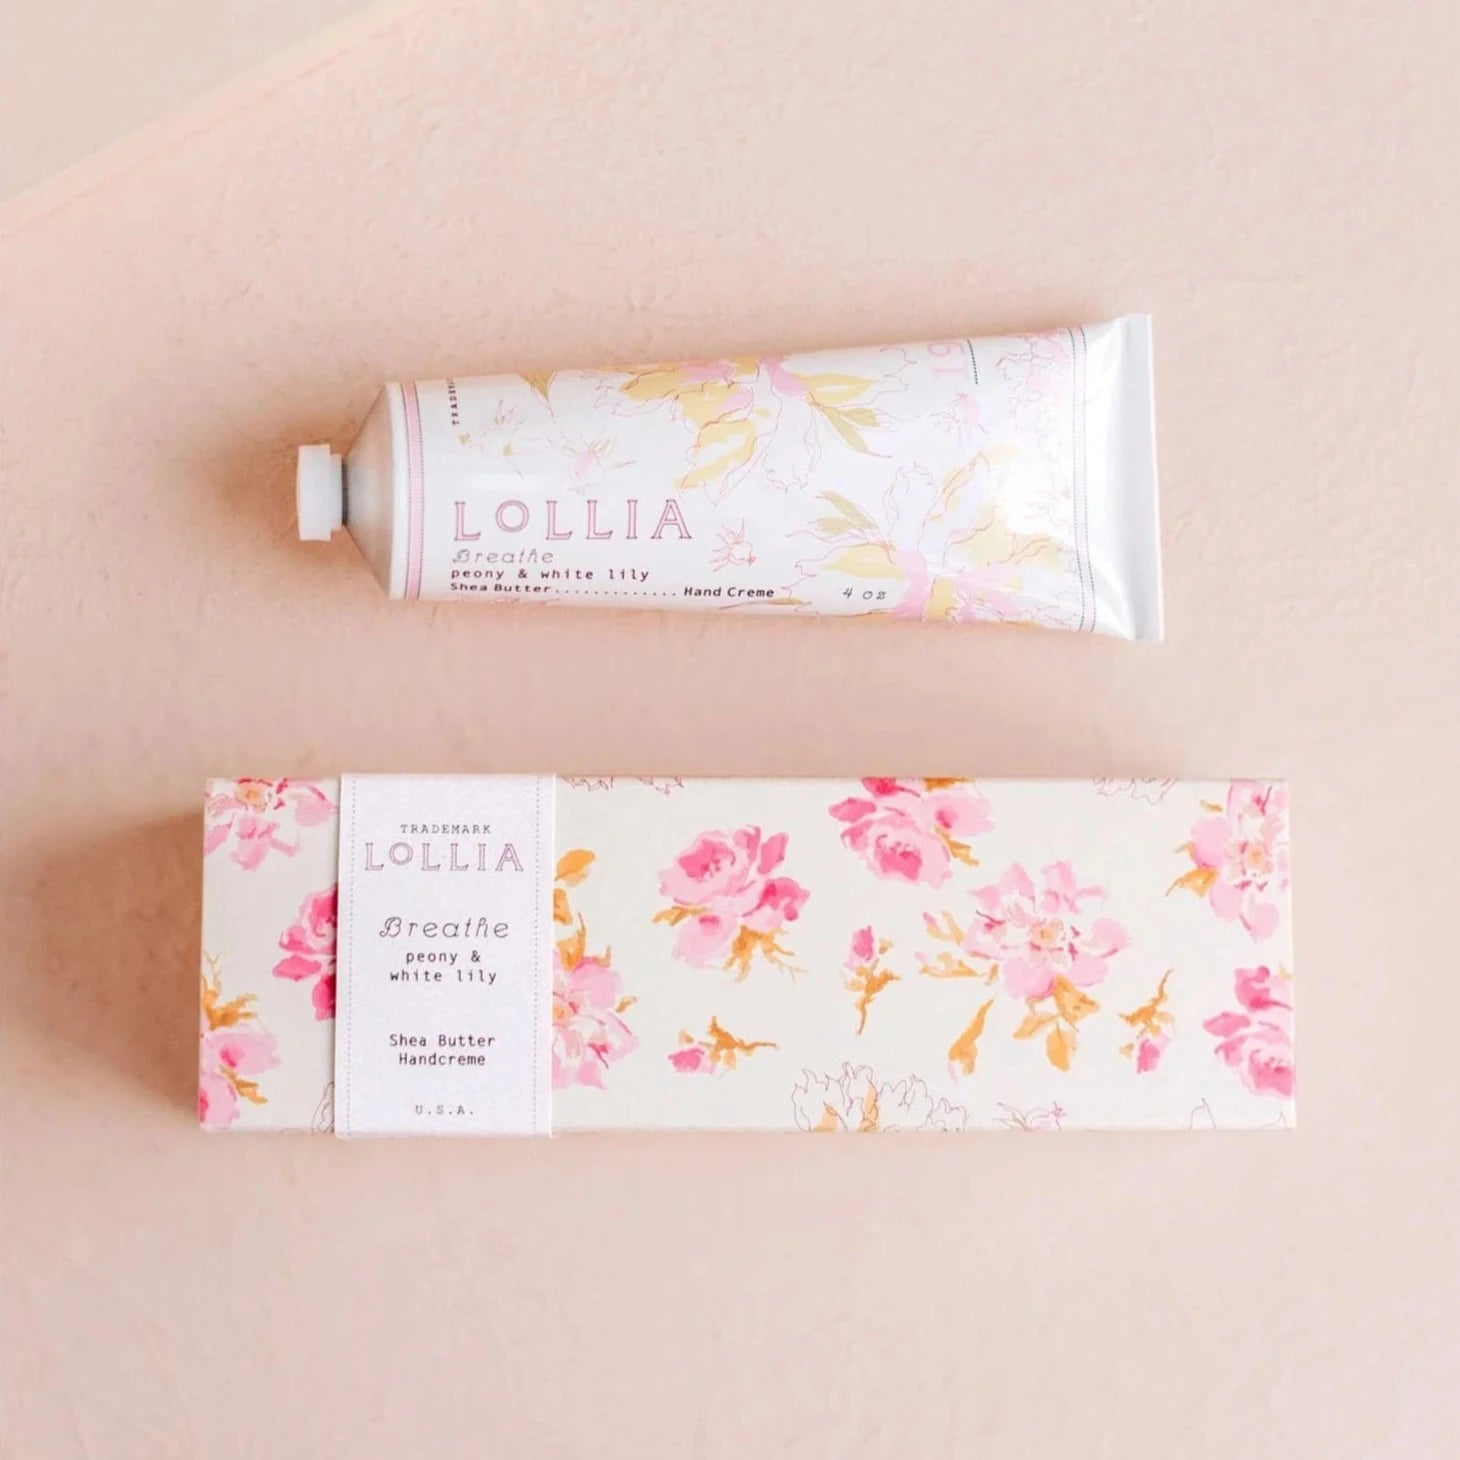 Lollia Shea Butter Hand Cream